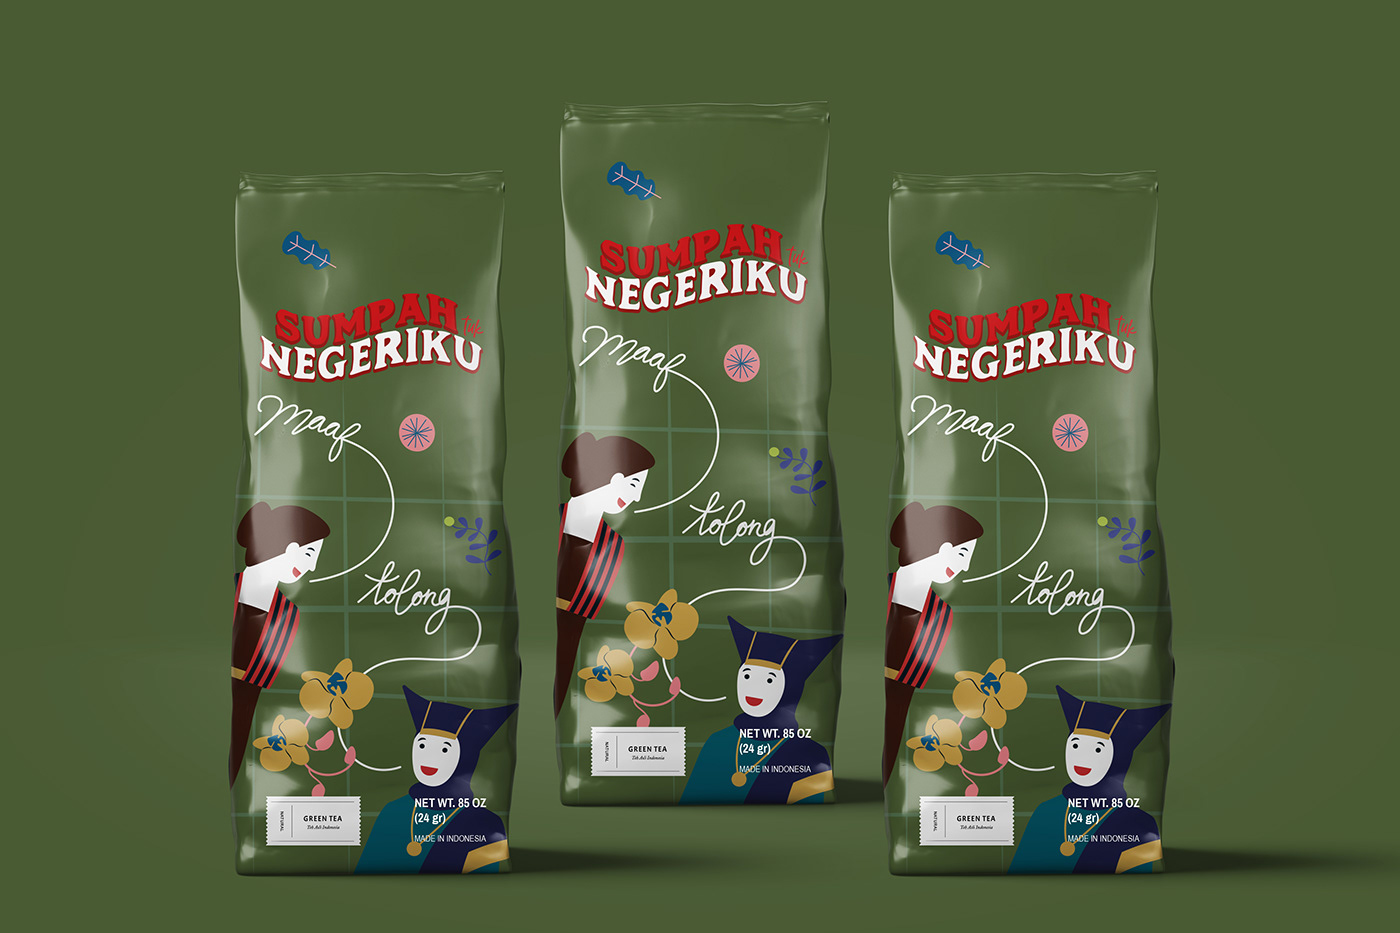 Packaging tea indonesia culture premium luxury design pastel Dynamic modern